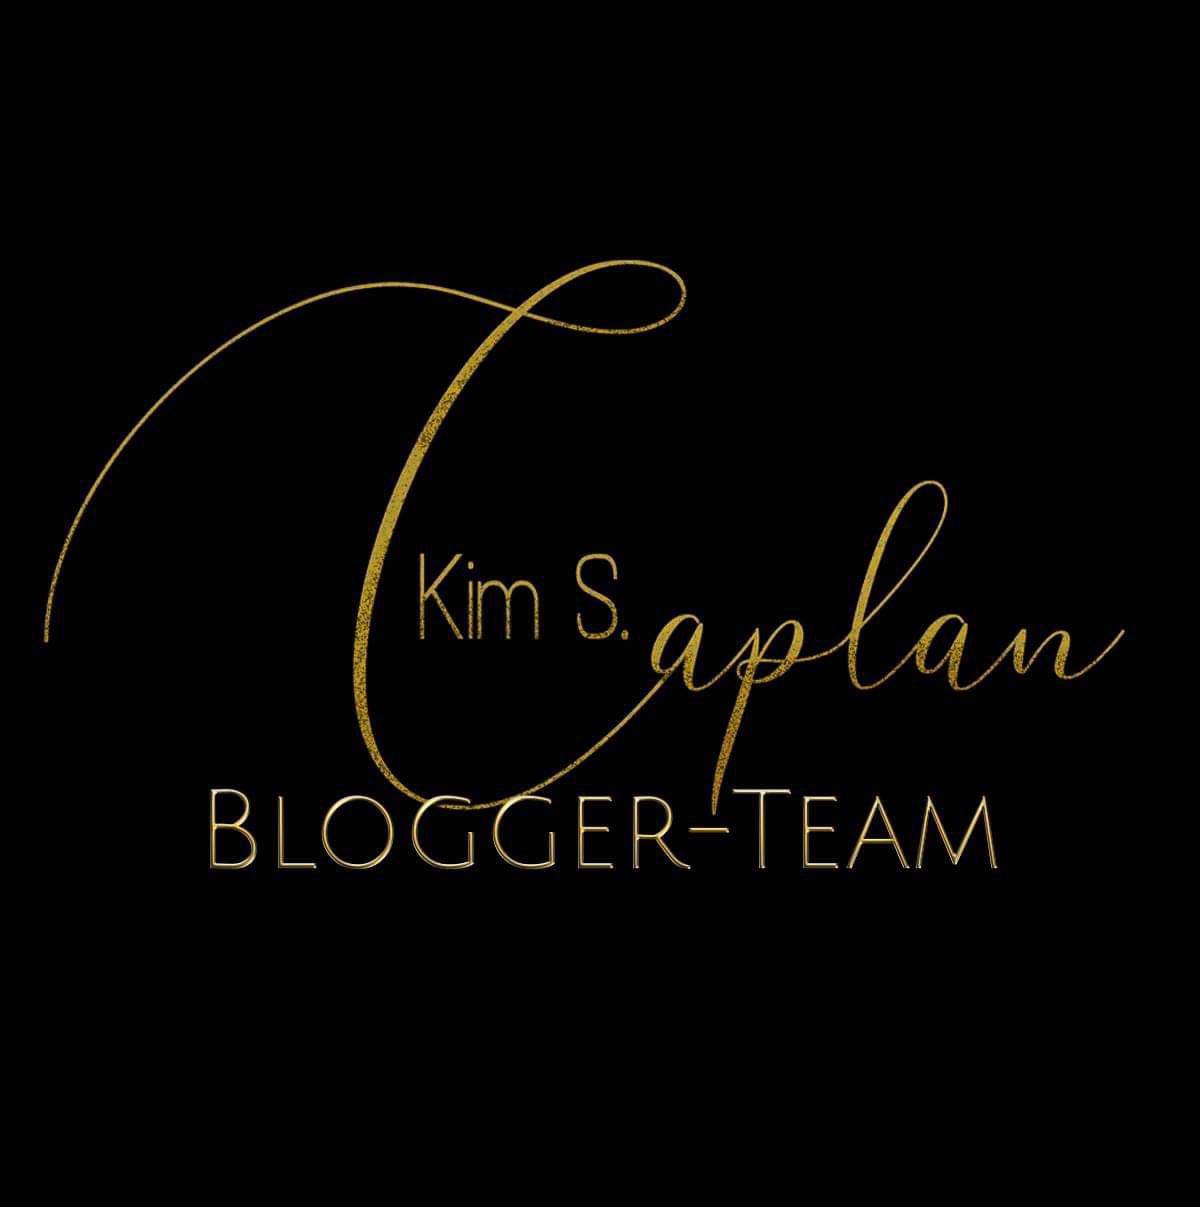 Blogger-Team